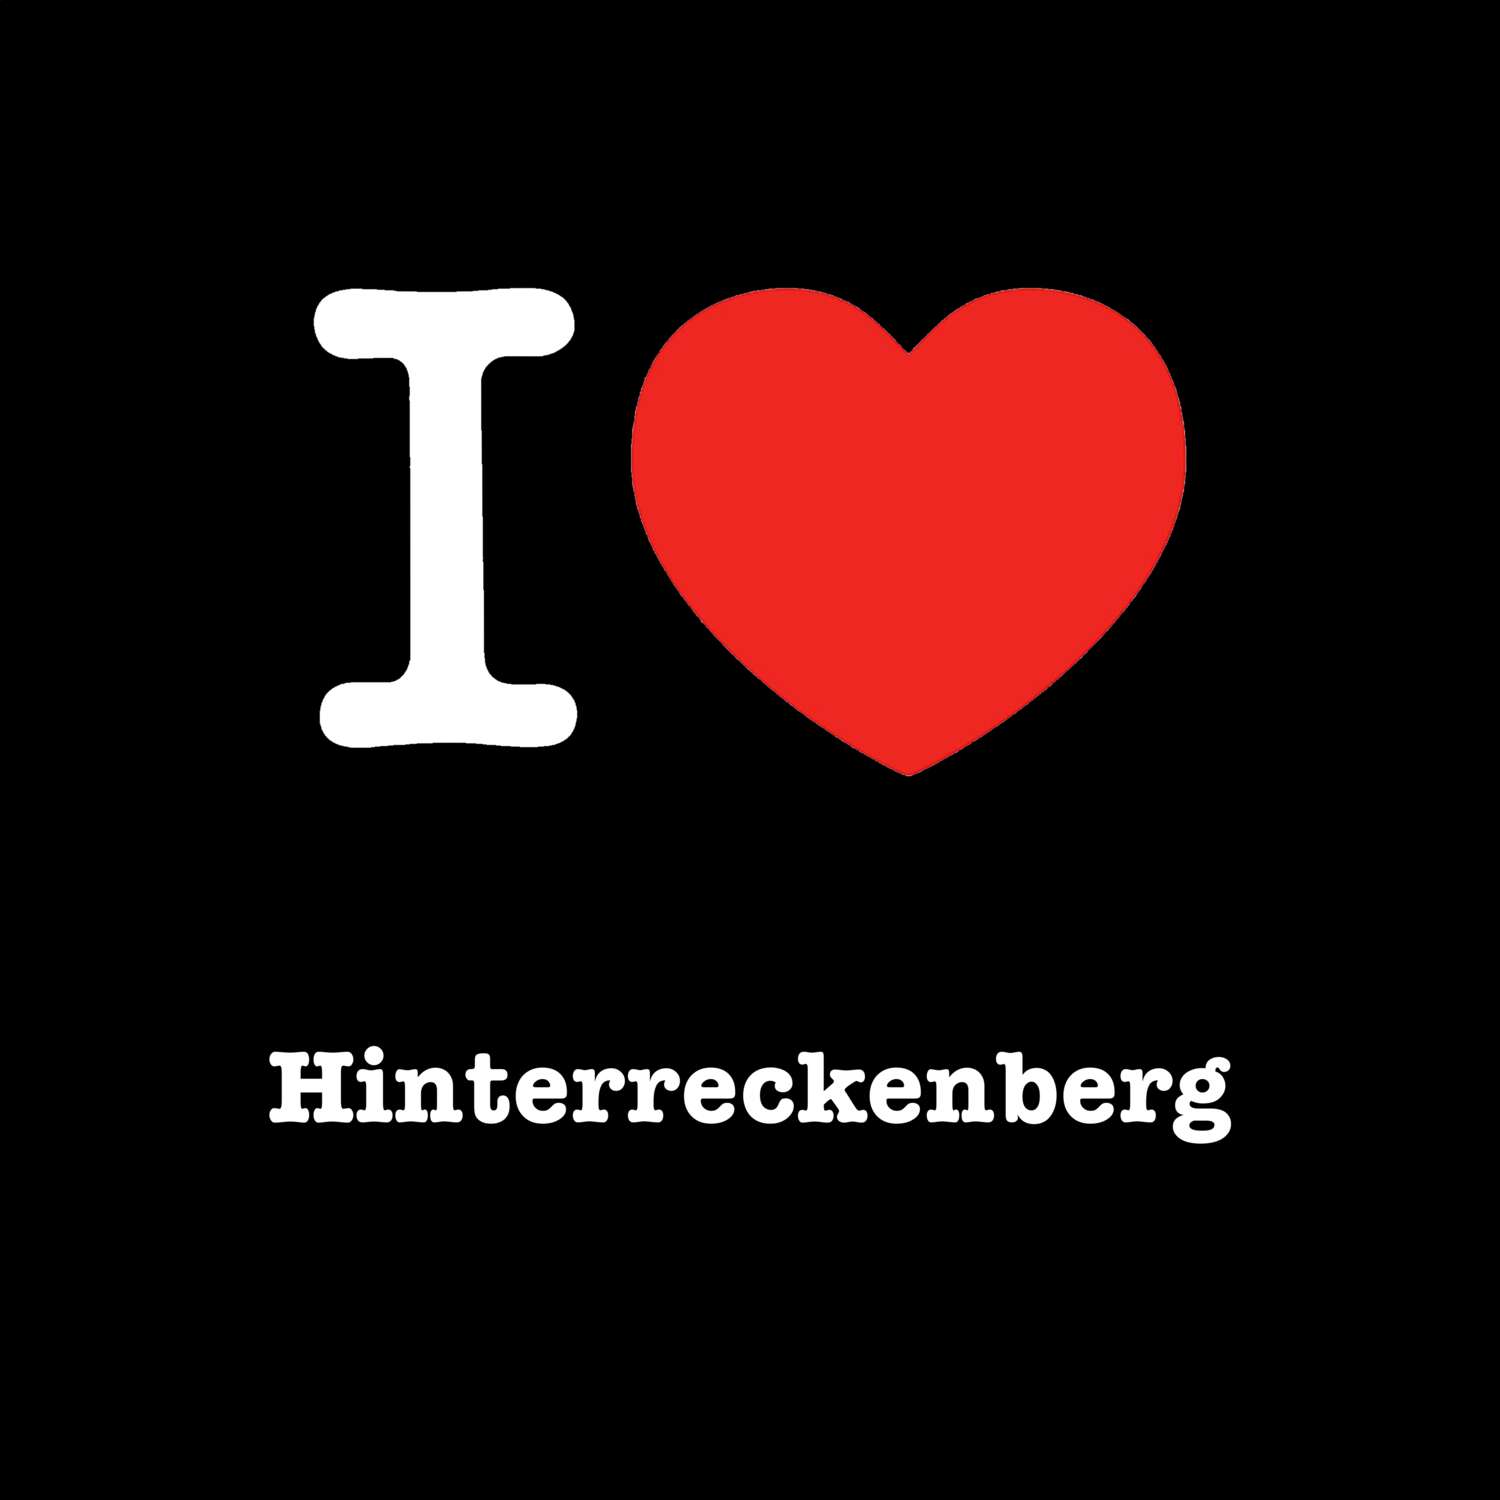 Hinterreckenberg T-Shirt »I love«